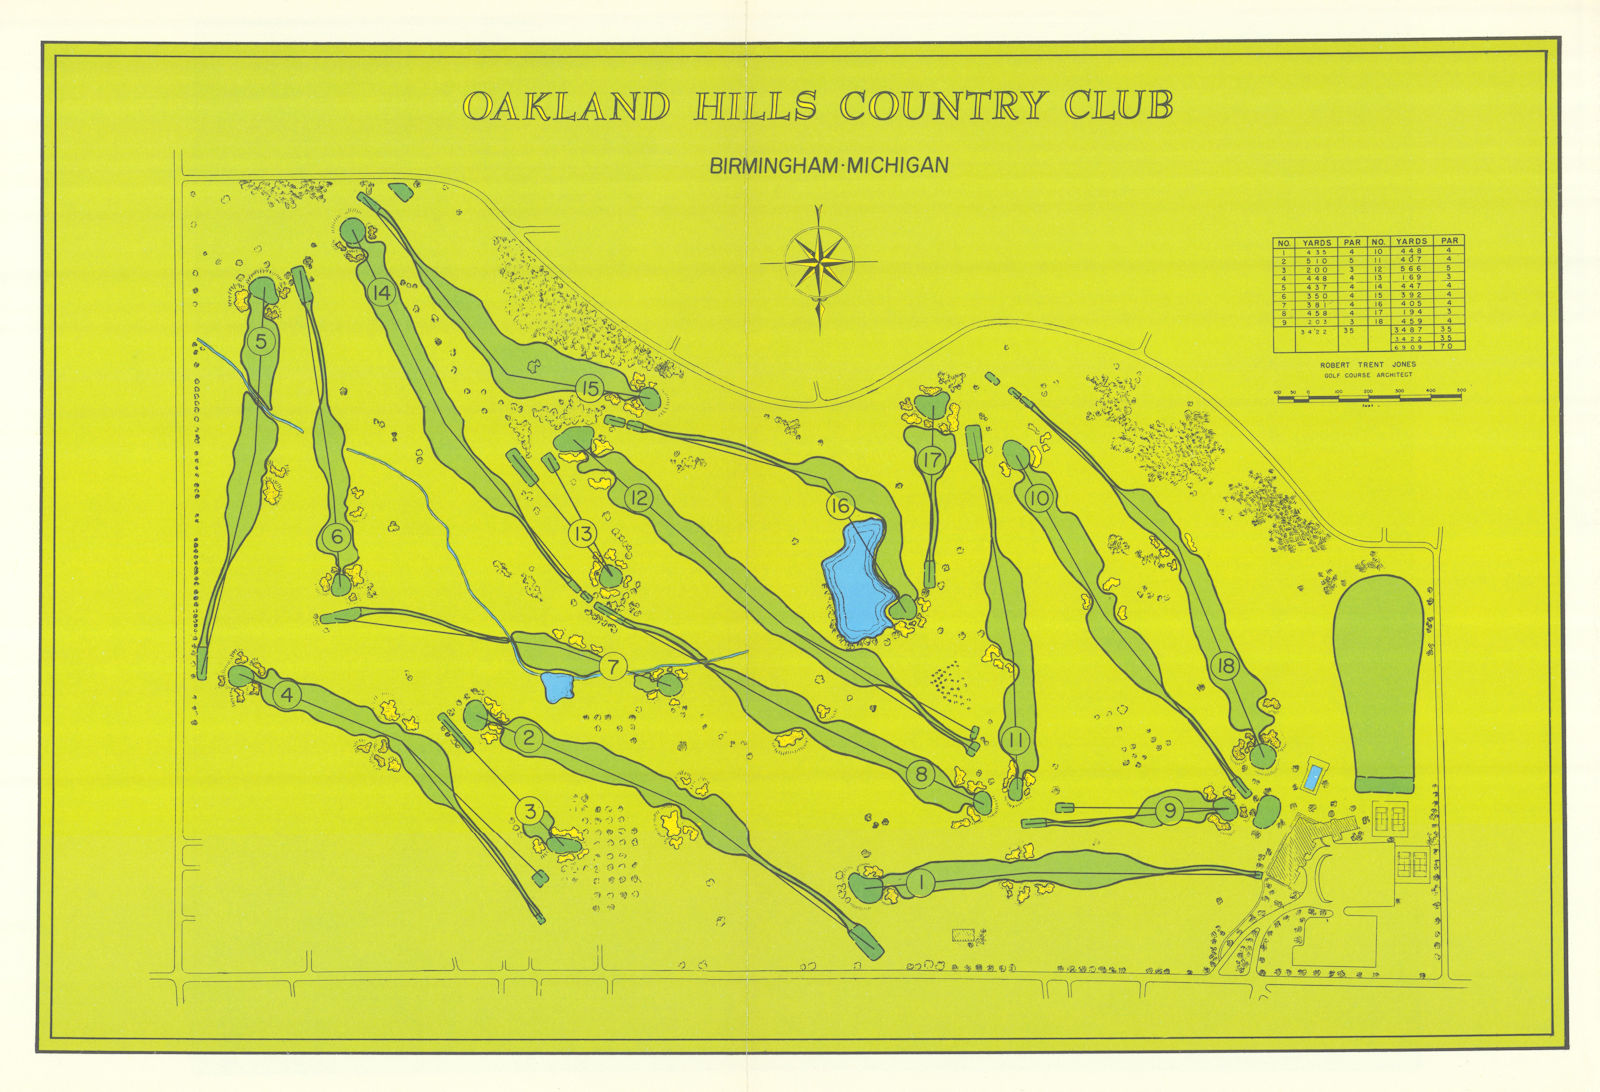 Oakland Hills Country Club Michigan Robert Trent Jones golf course plan 1966 map